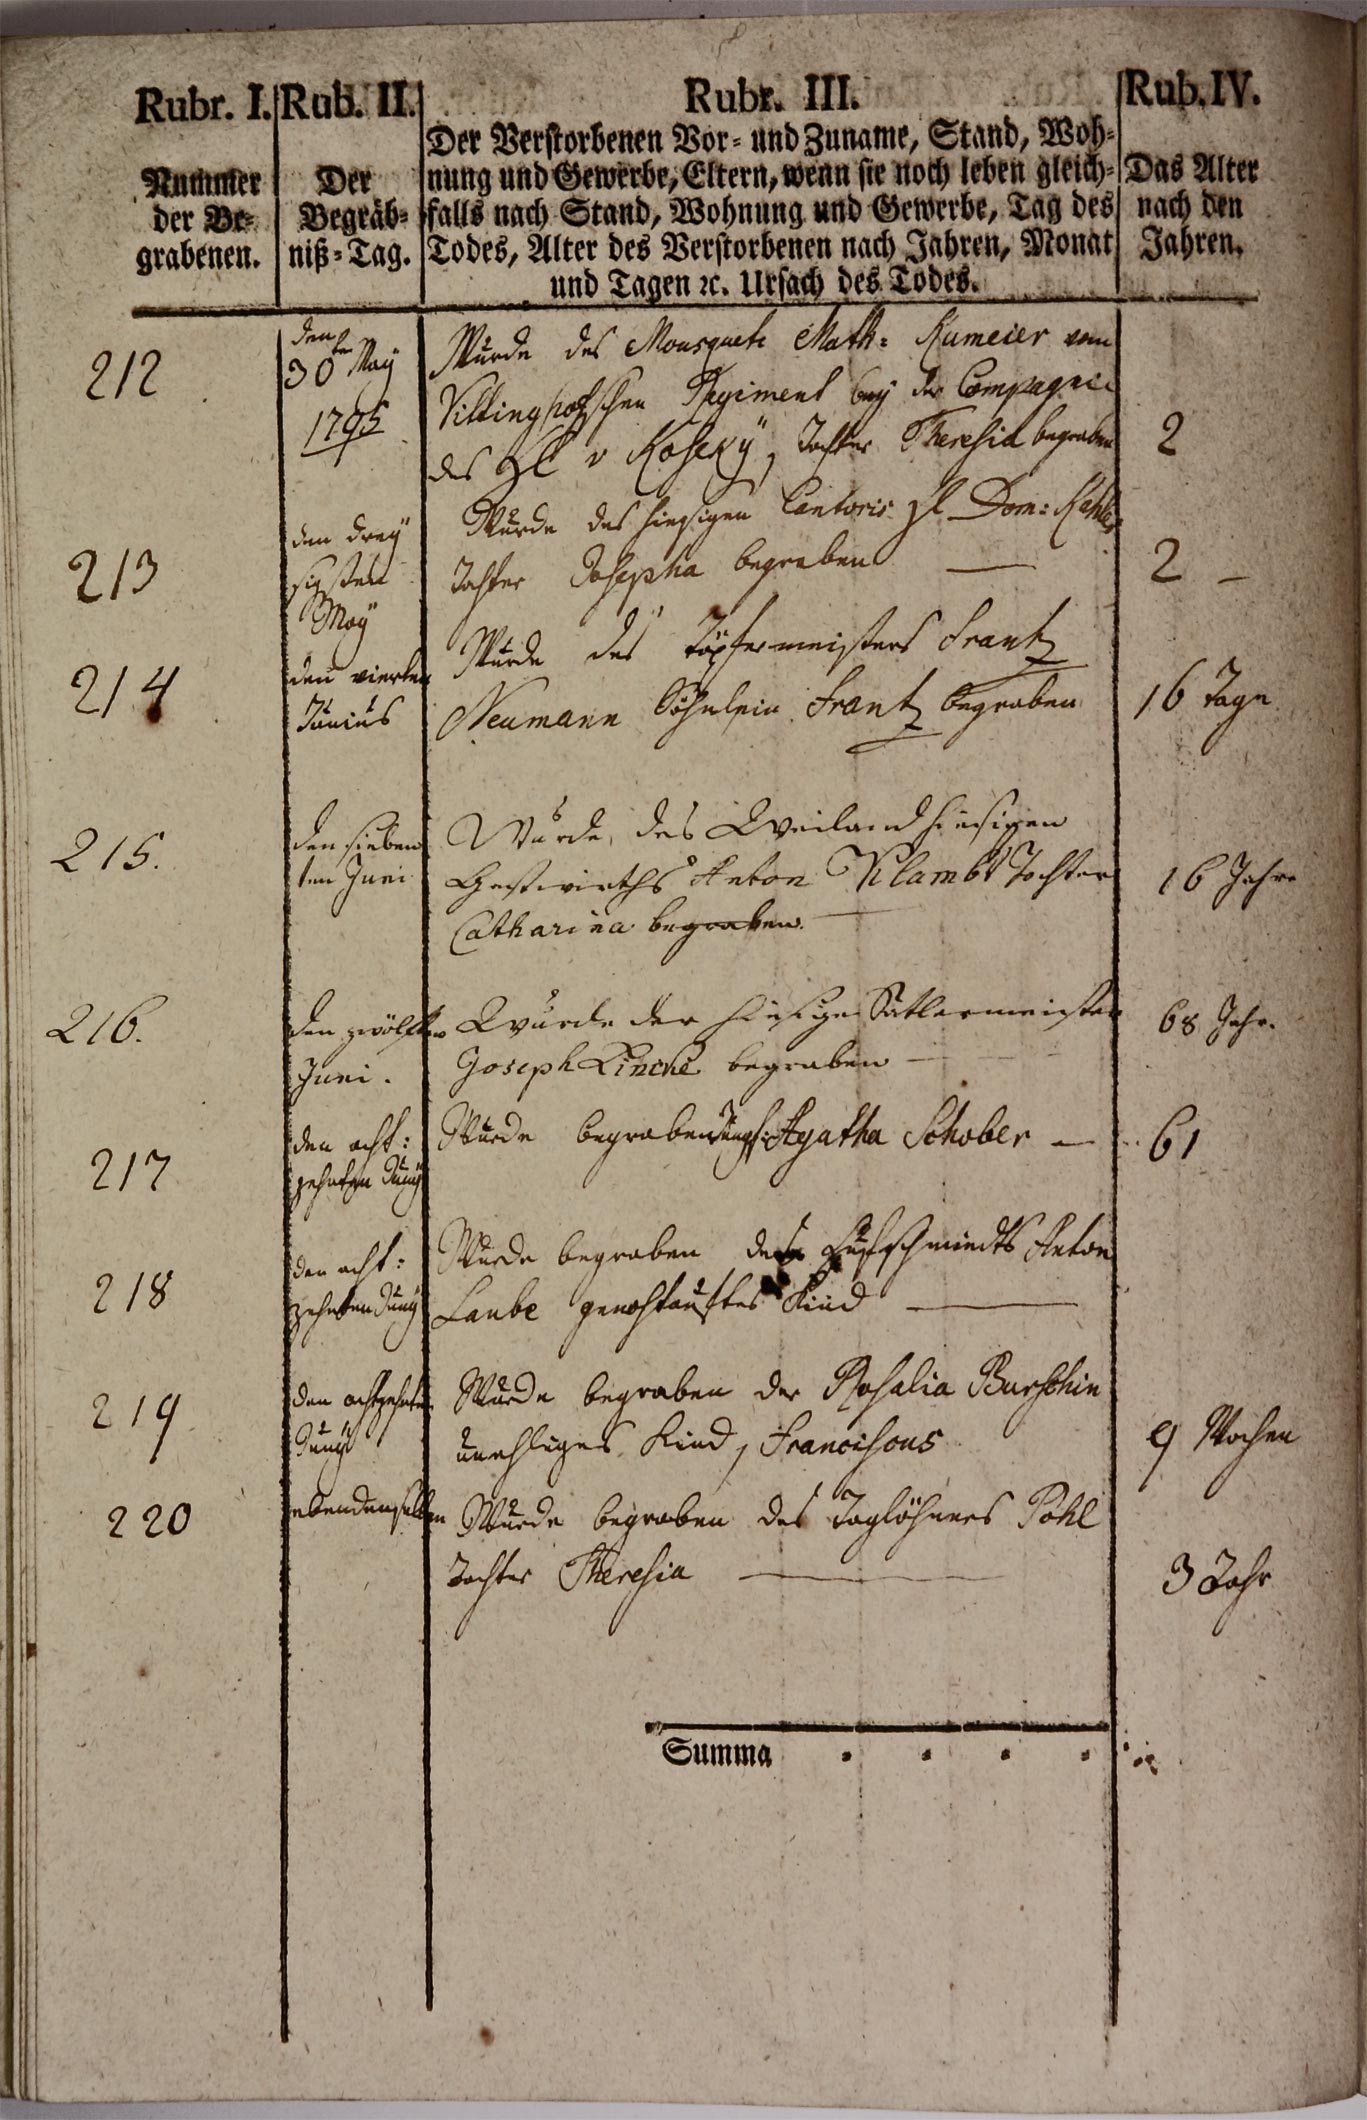 Kirchenbuch 1793 Seite 98